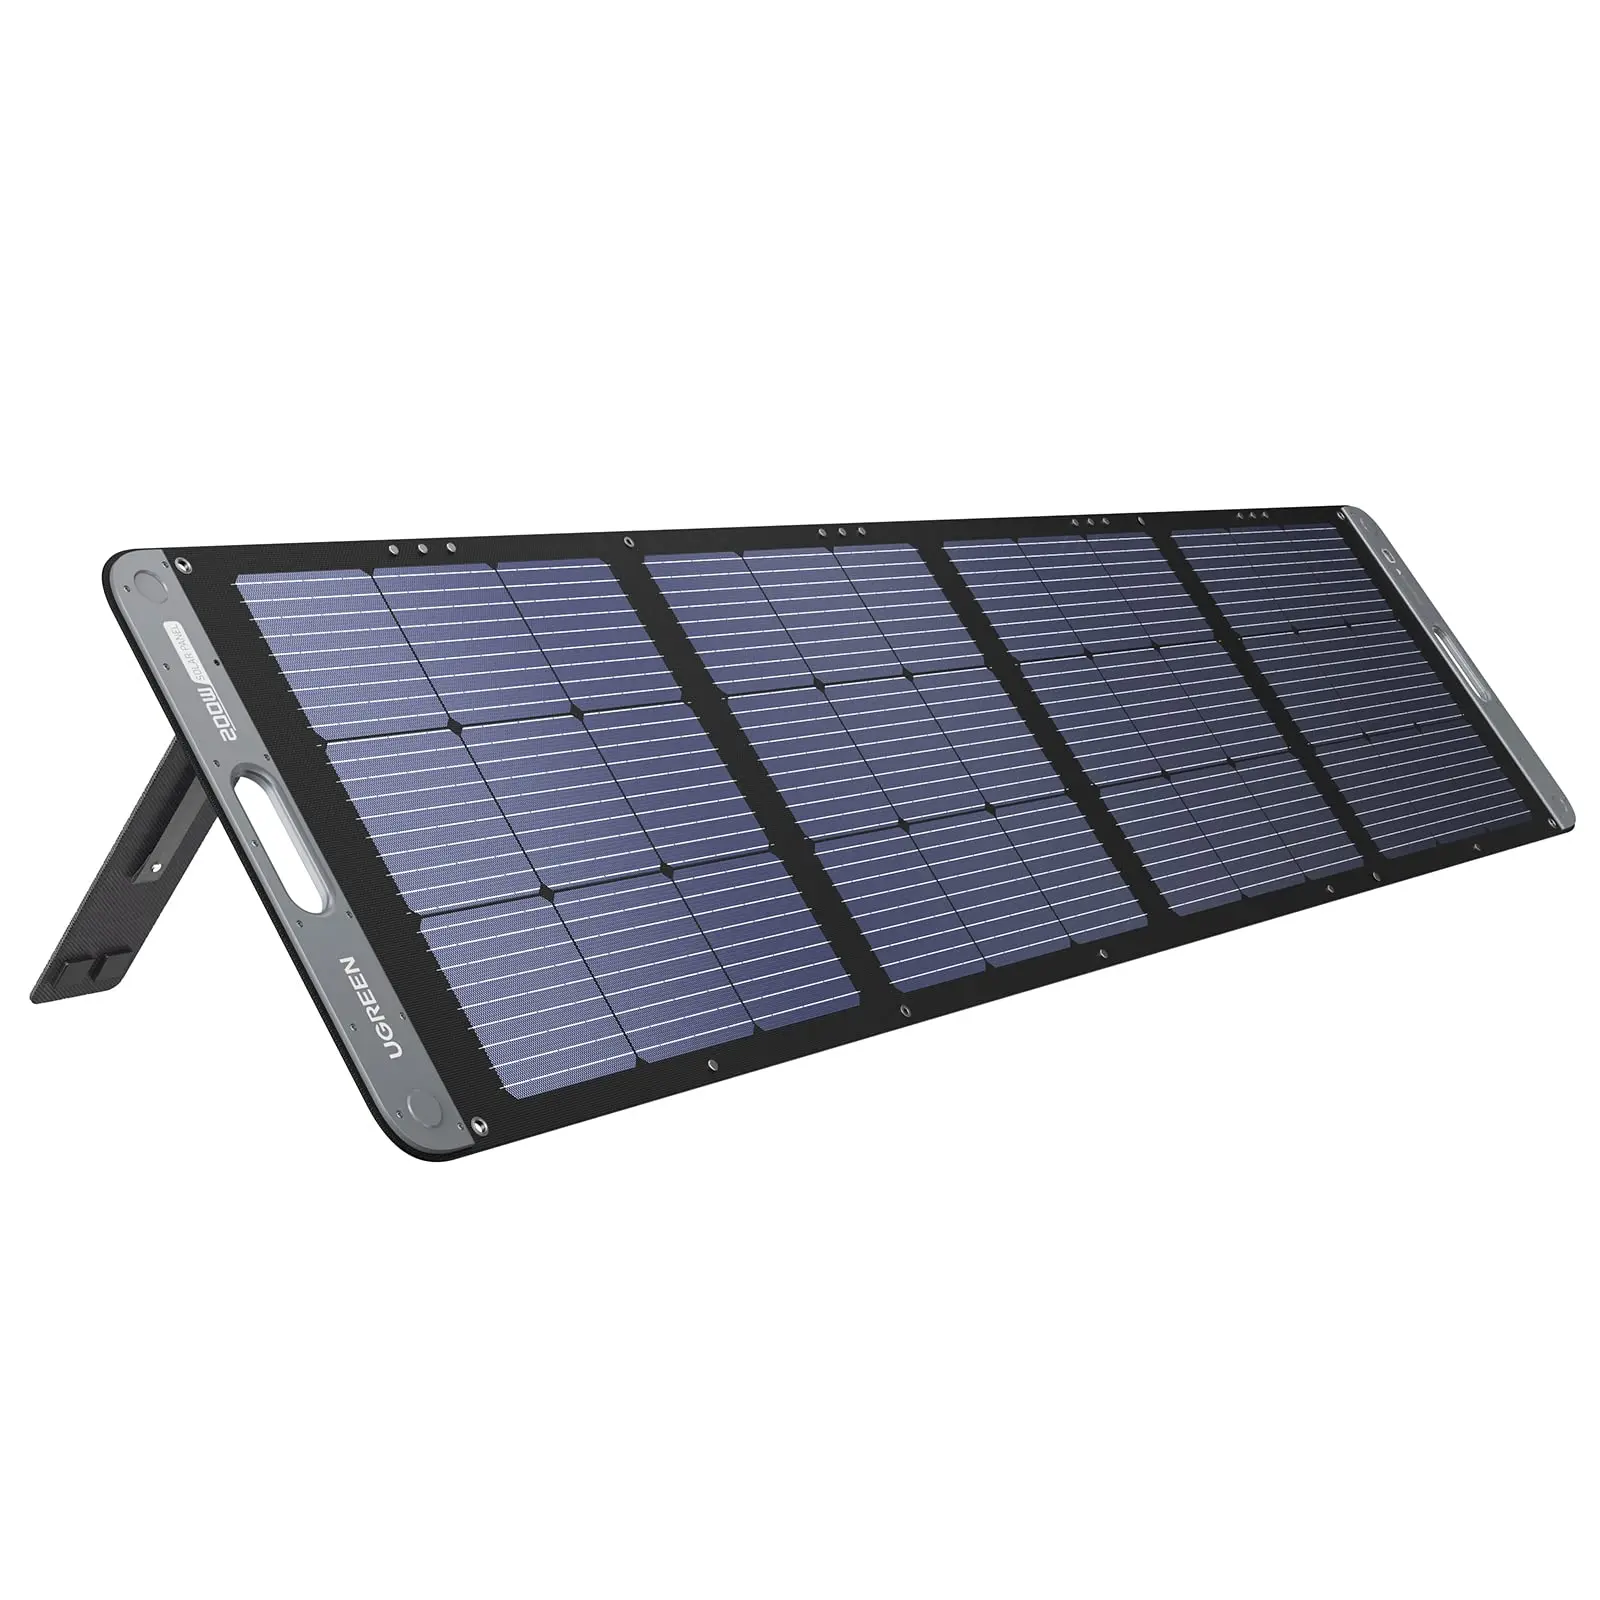 200watt solar panel - How much does a 200W solar panel weight